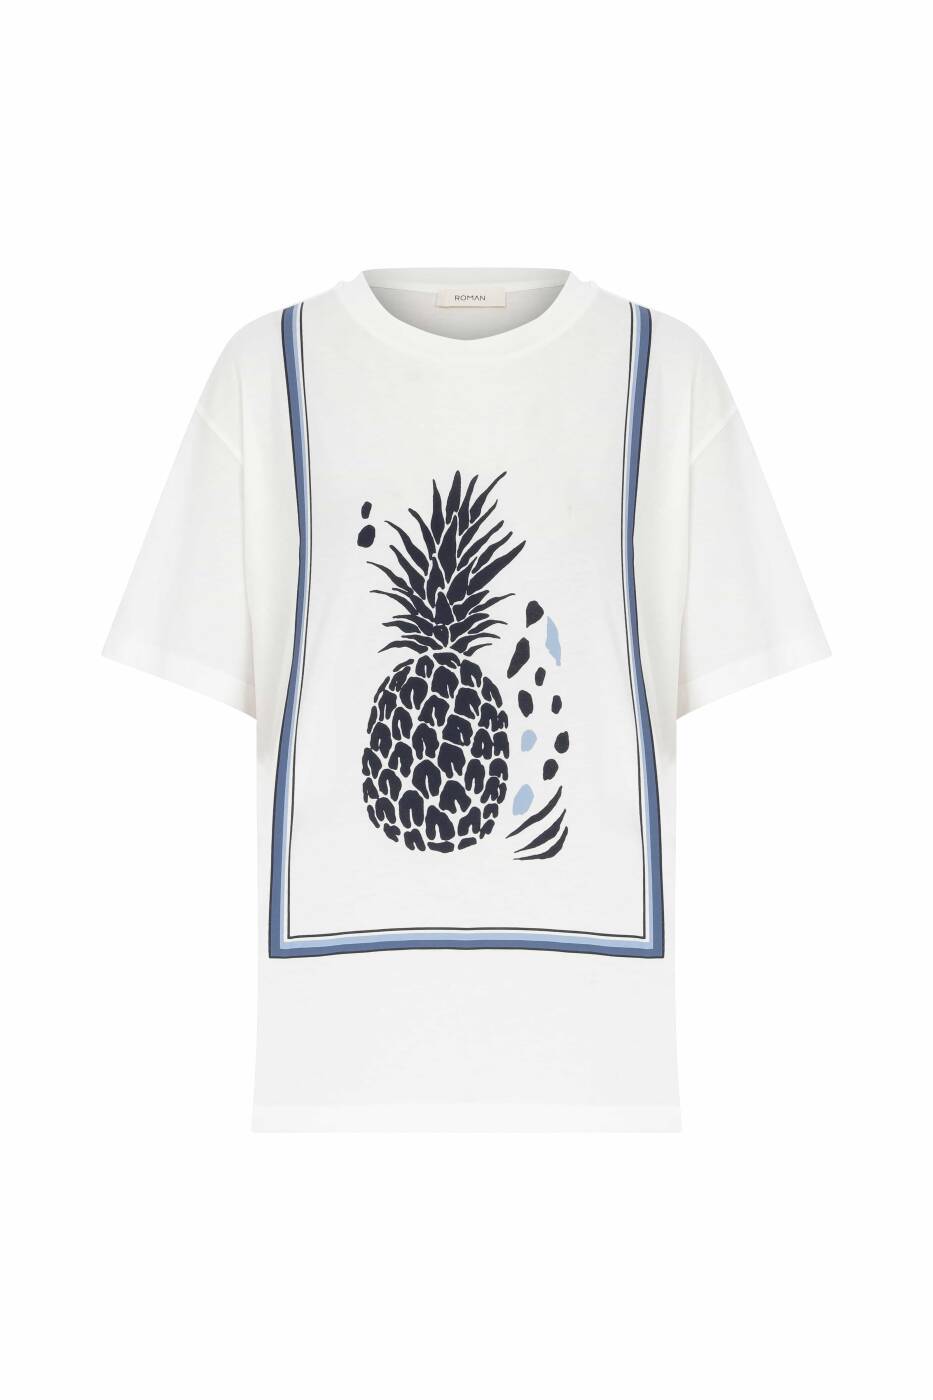 Roman White Pineapple Print Women's T-shirt. 2